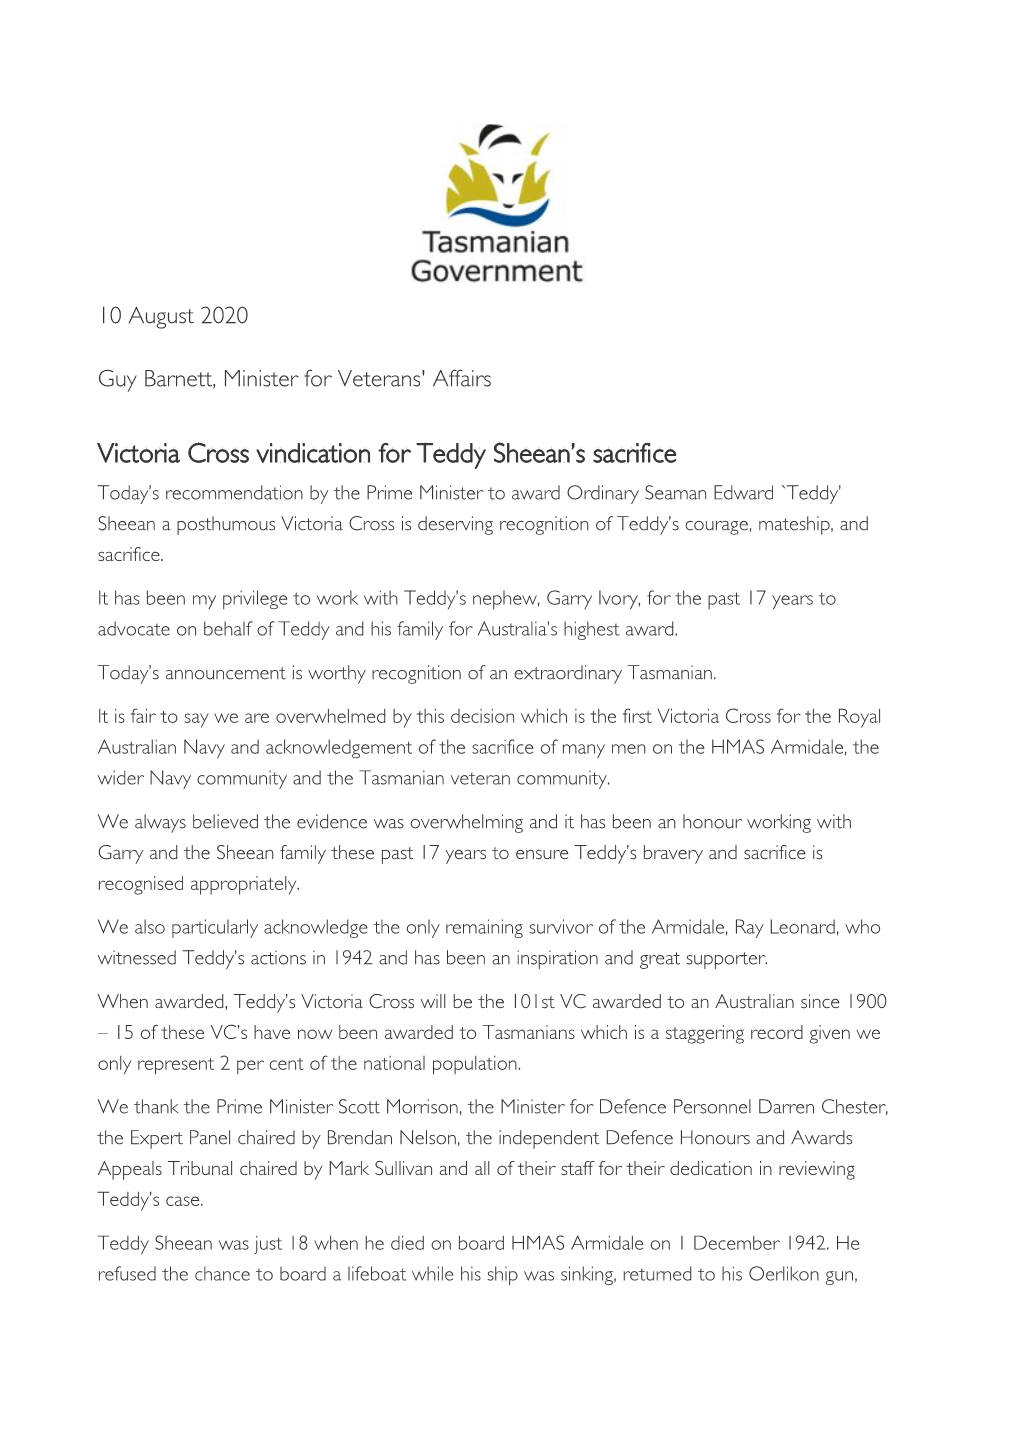 Victoria Cross Vindication for Teddy Sheean's Sacrifice